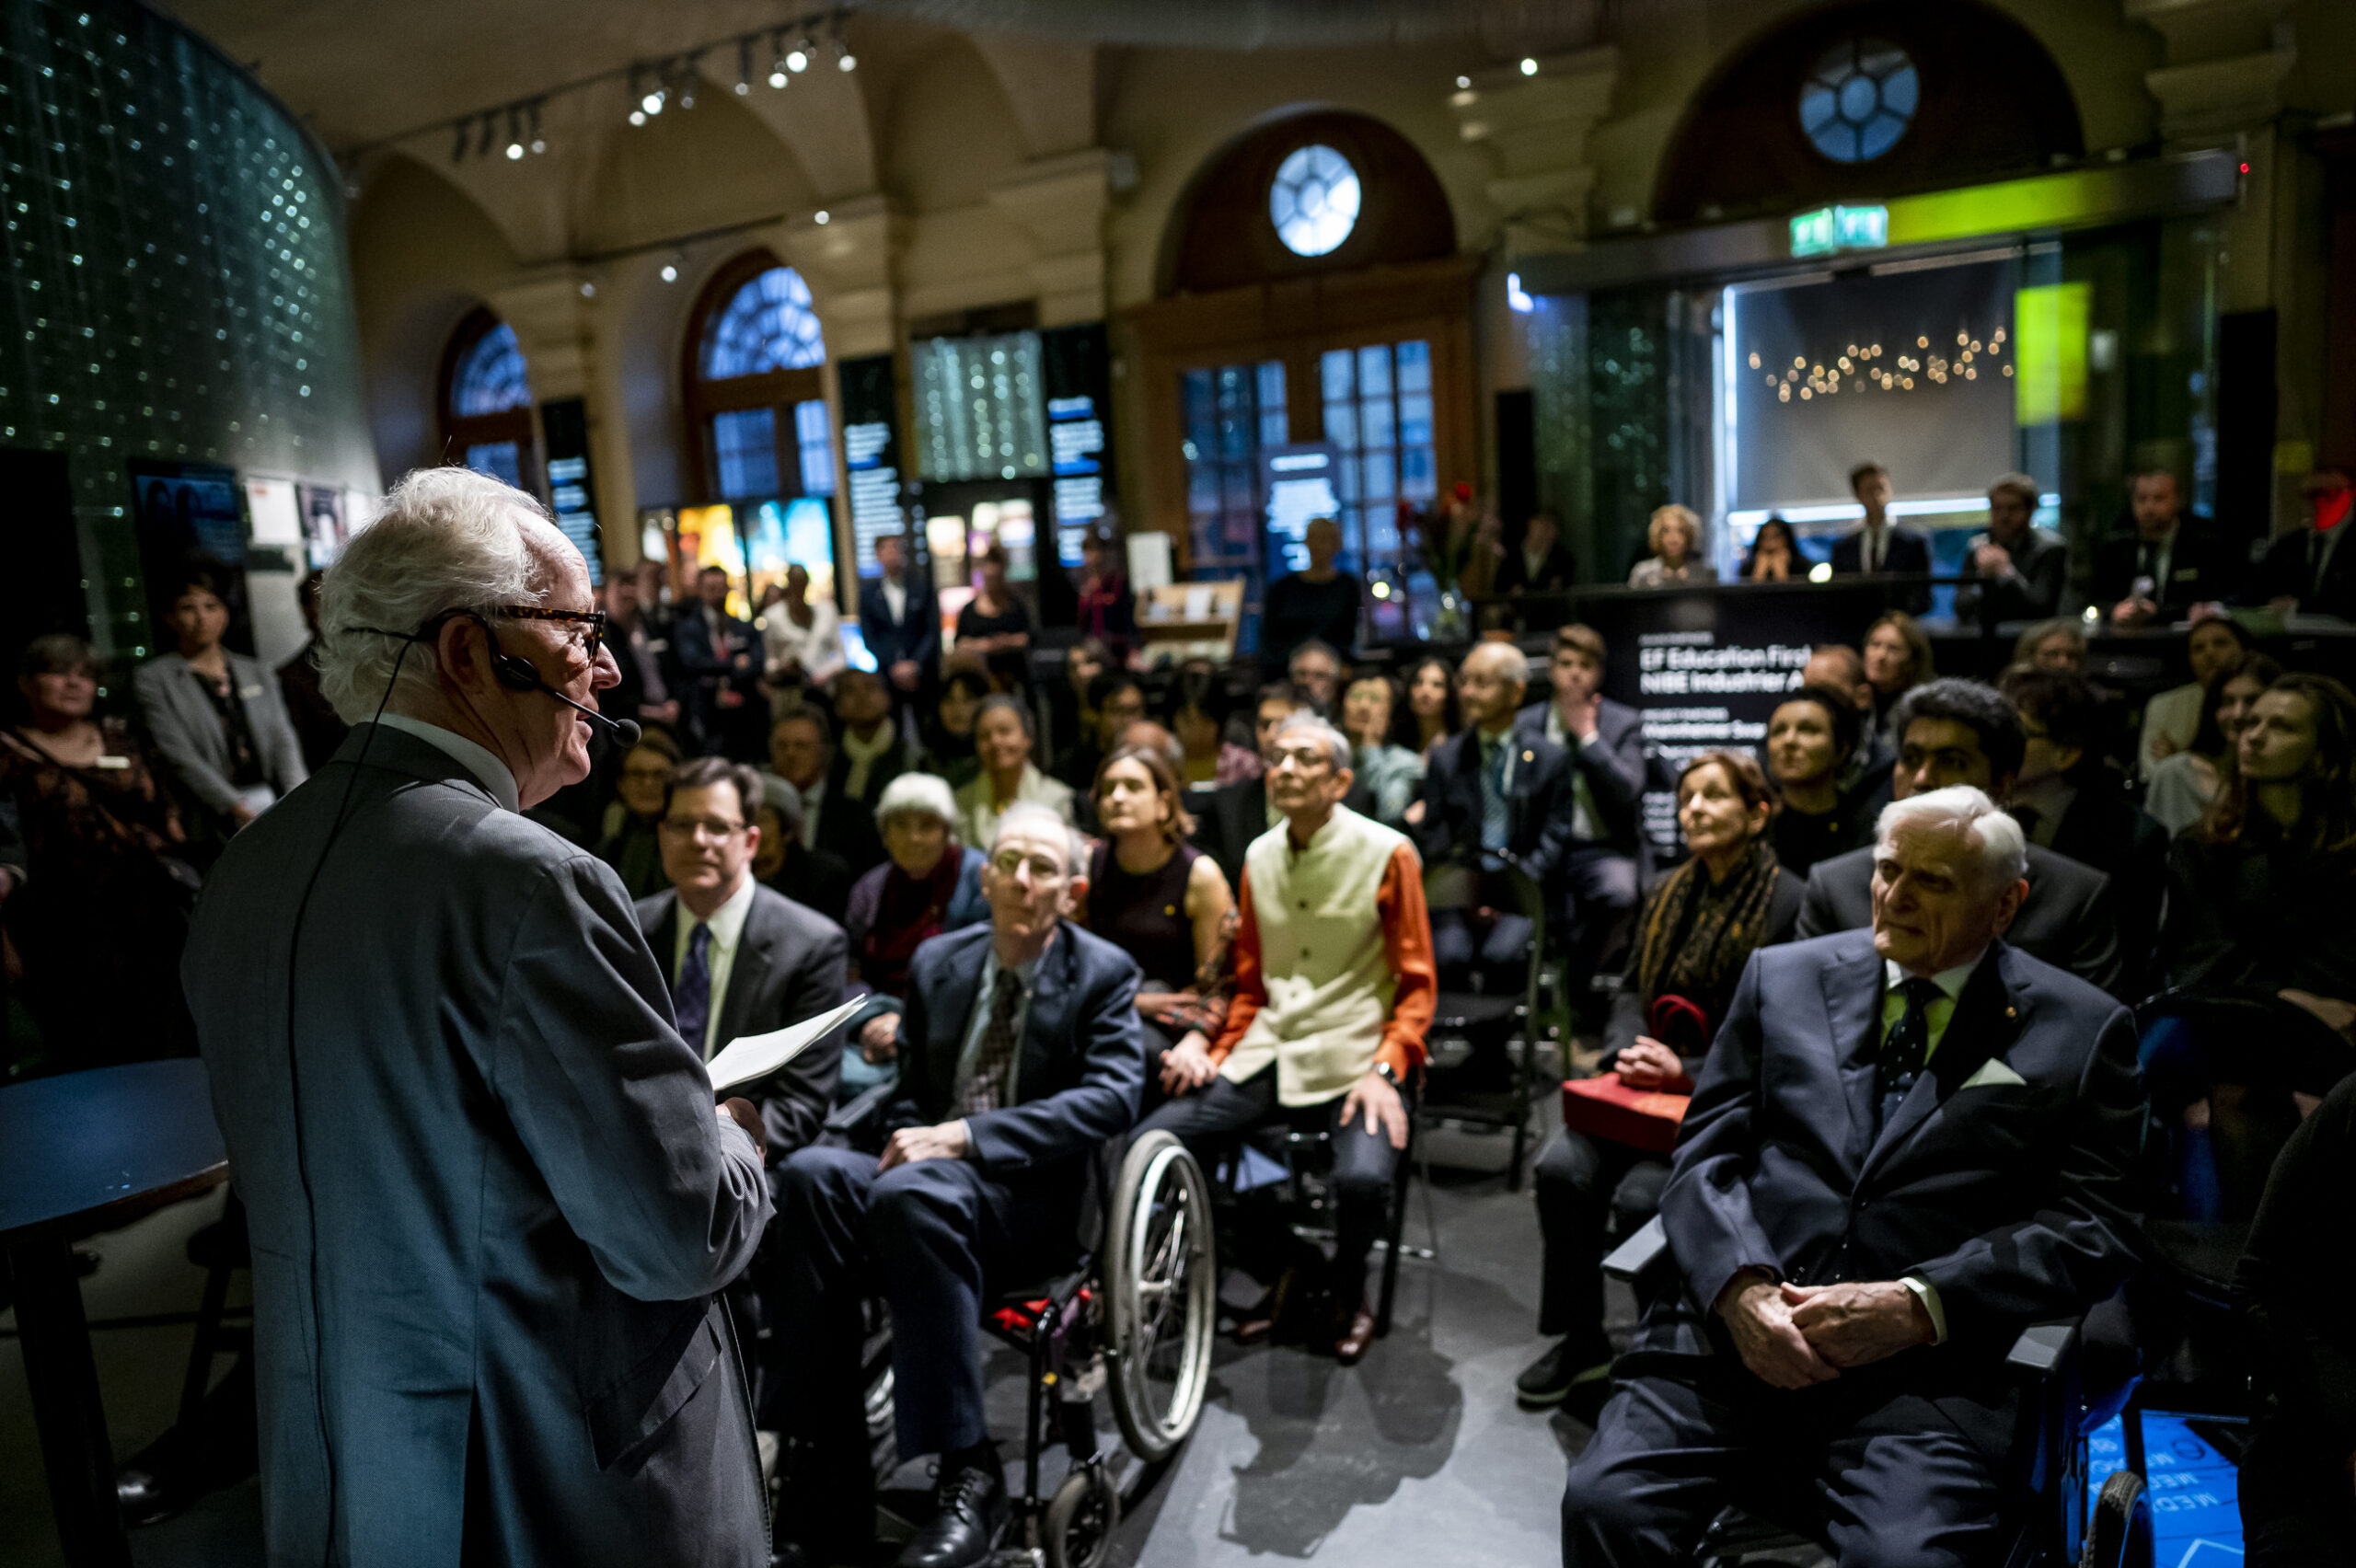 2019 nobel laureates listening to a speaker at the nobel museum